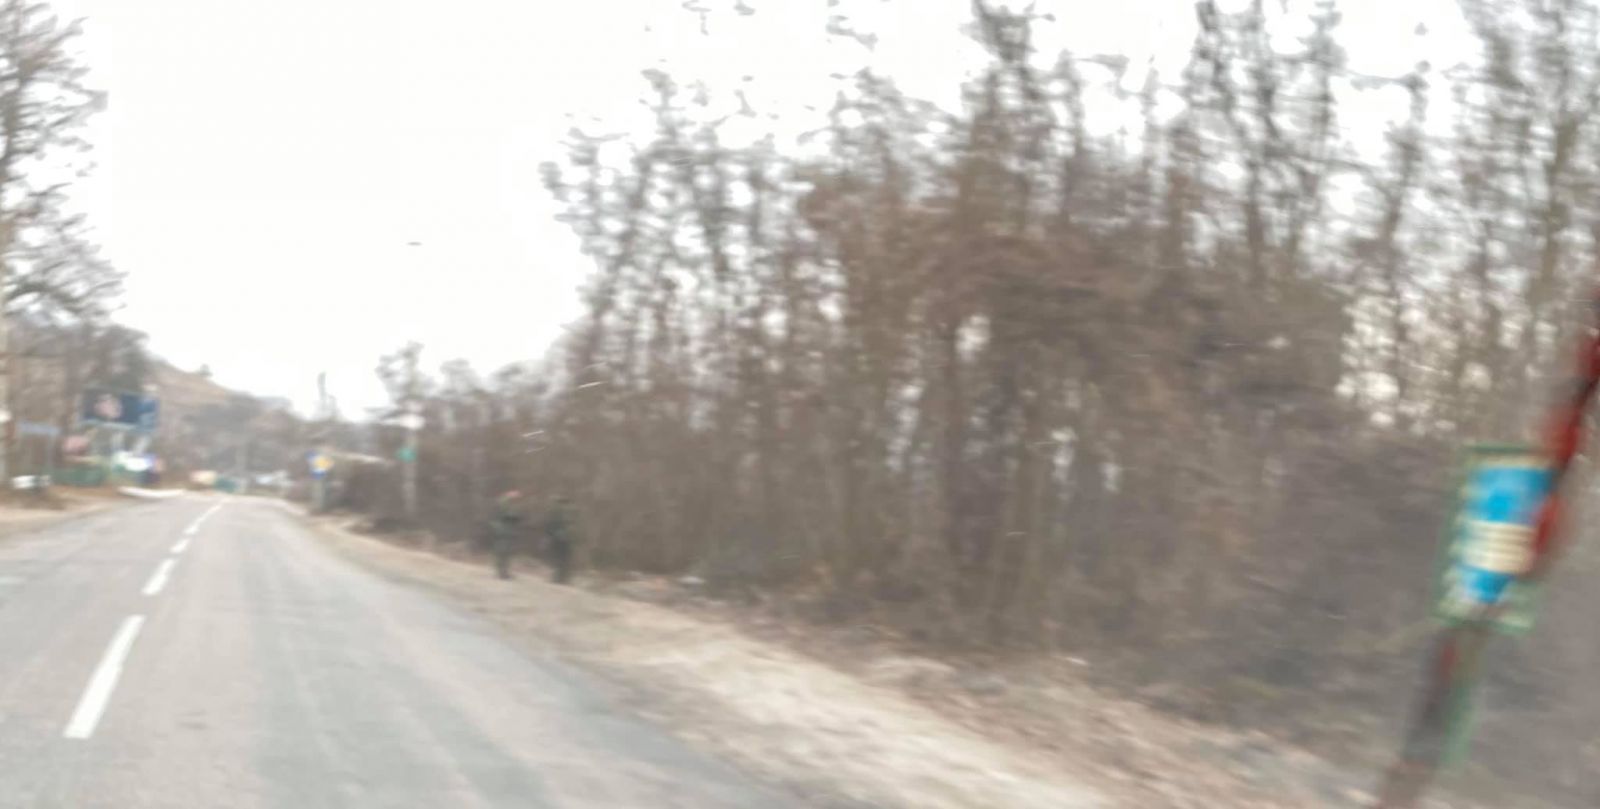 Охрана президента: Омелян рассказал о нацгвардейцах на пути кортежа Зеленского, фото — Фейсбук В.Омеляна